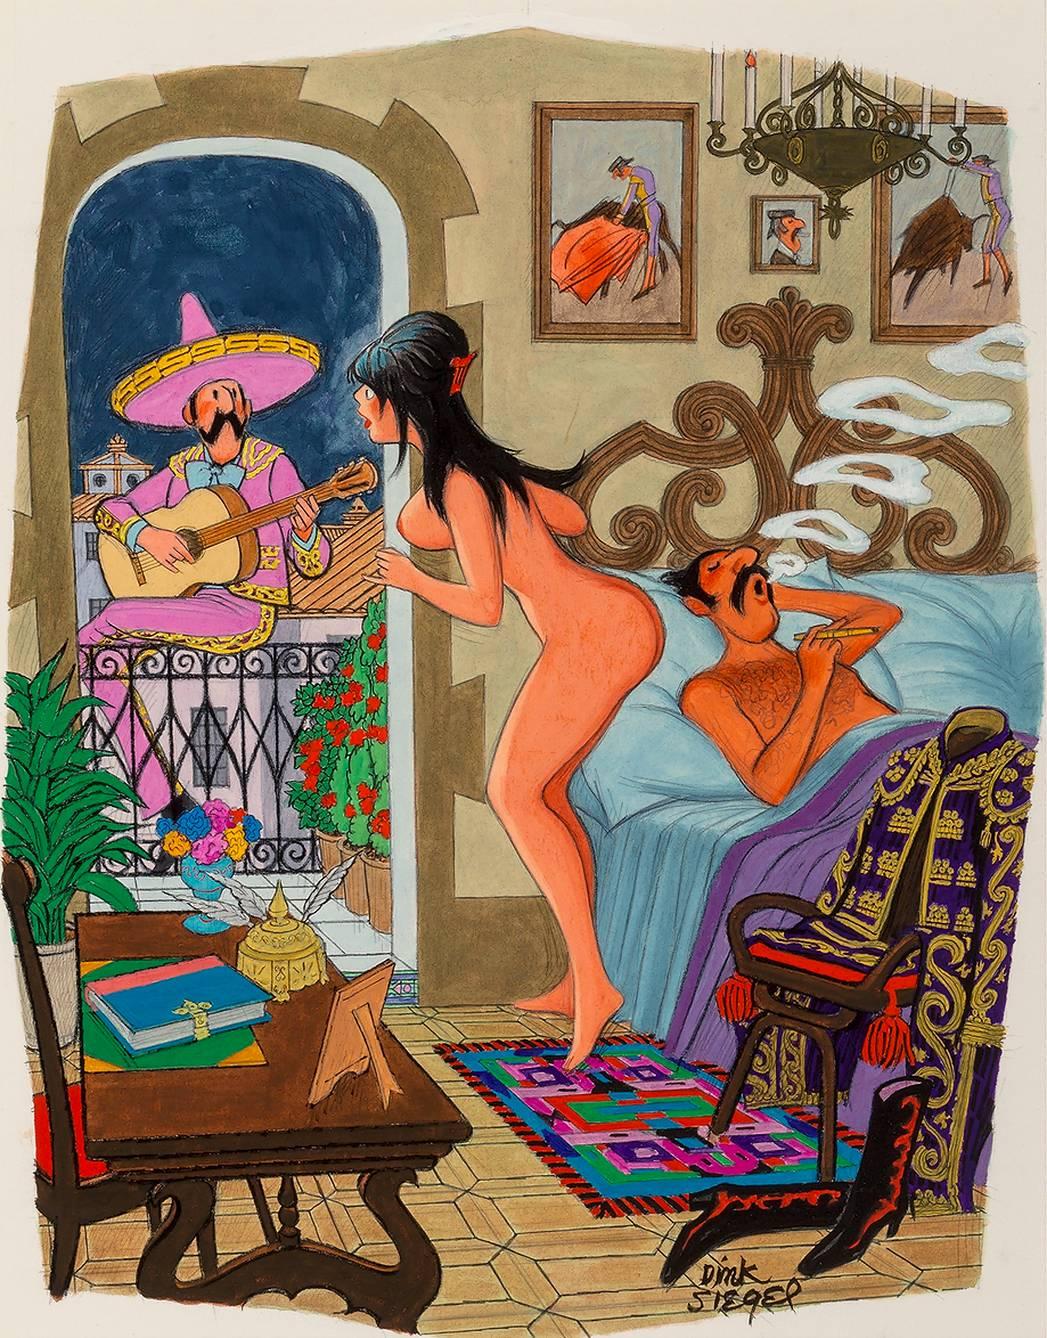 Dink Siegel Figurative Painting - Playboy cartoon, But Don Carlos